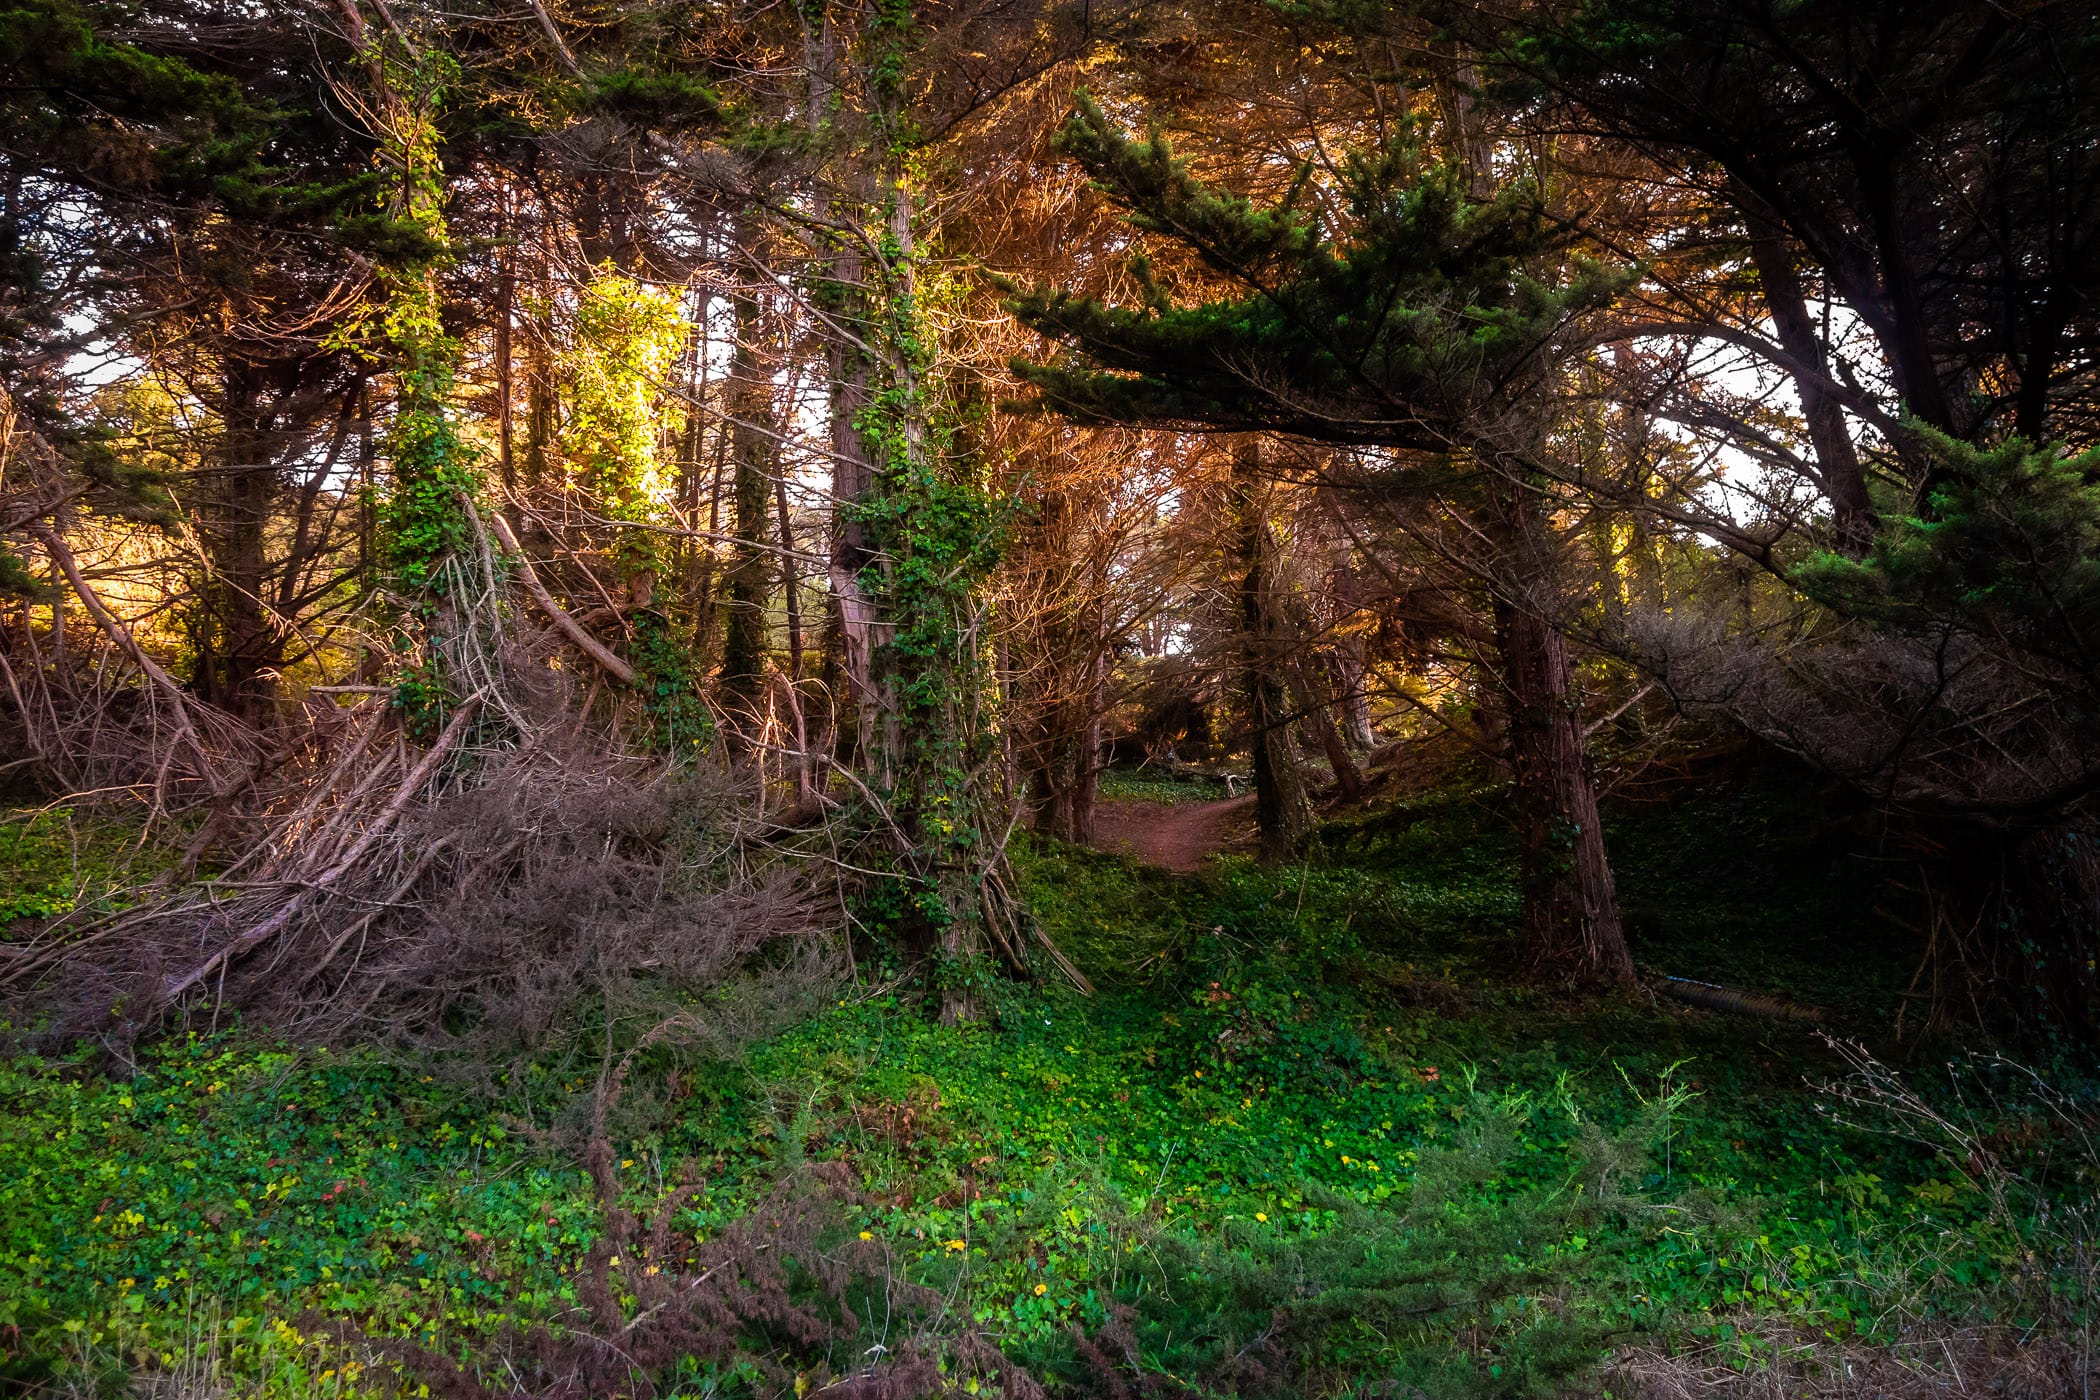 The evening sun illuminates a wooded area along the Coastal Trail at Lands End, San Francisco.